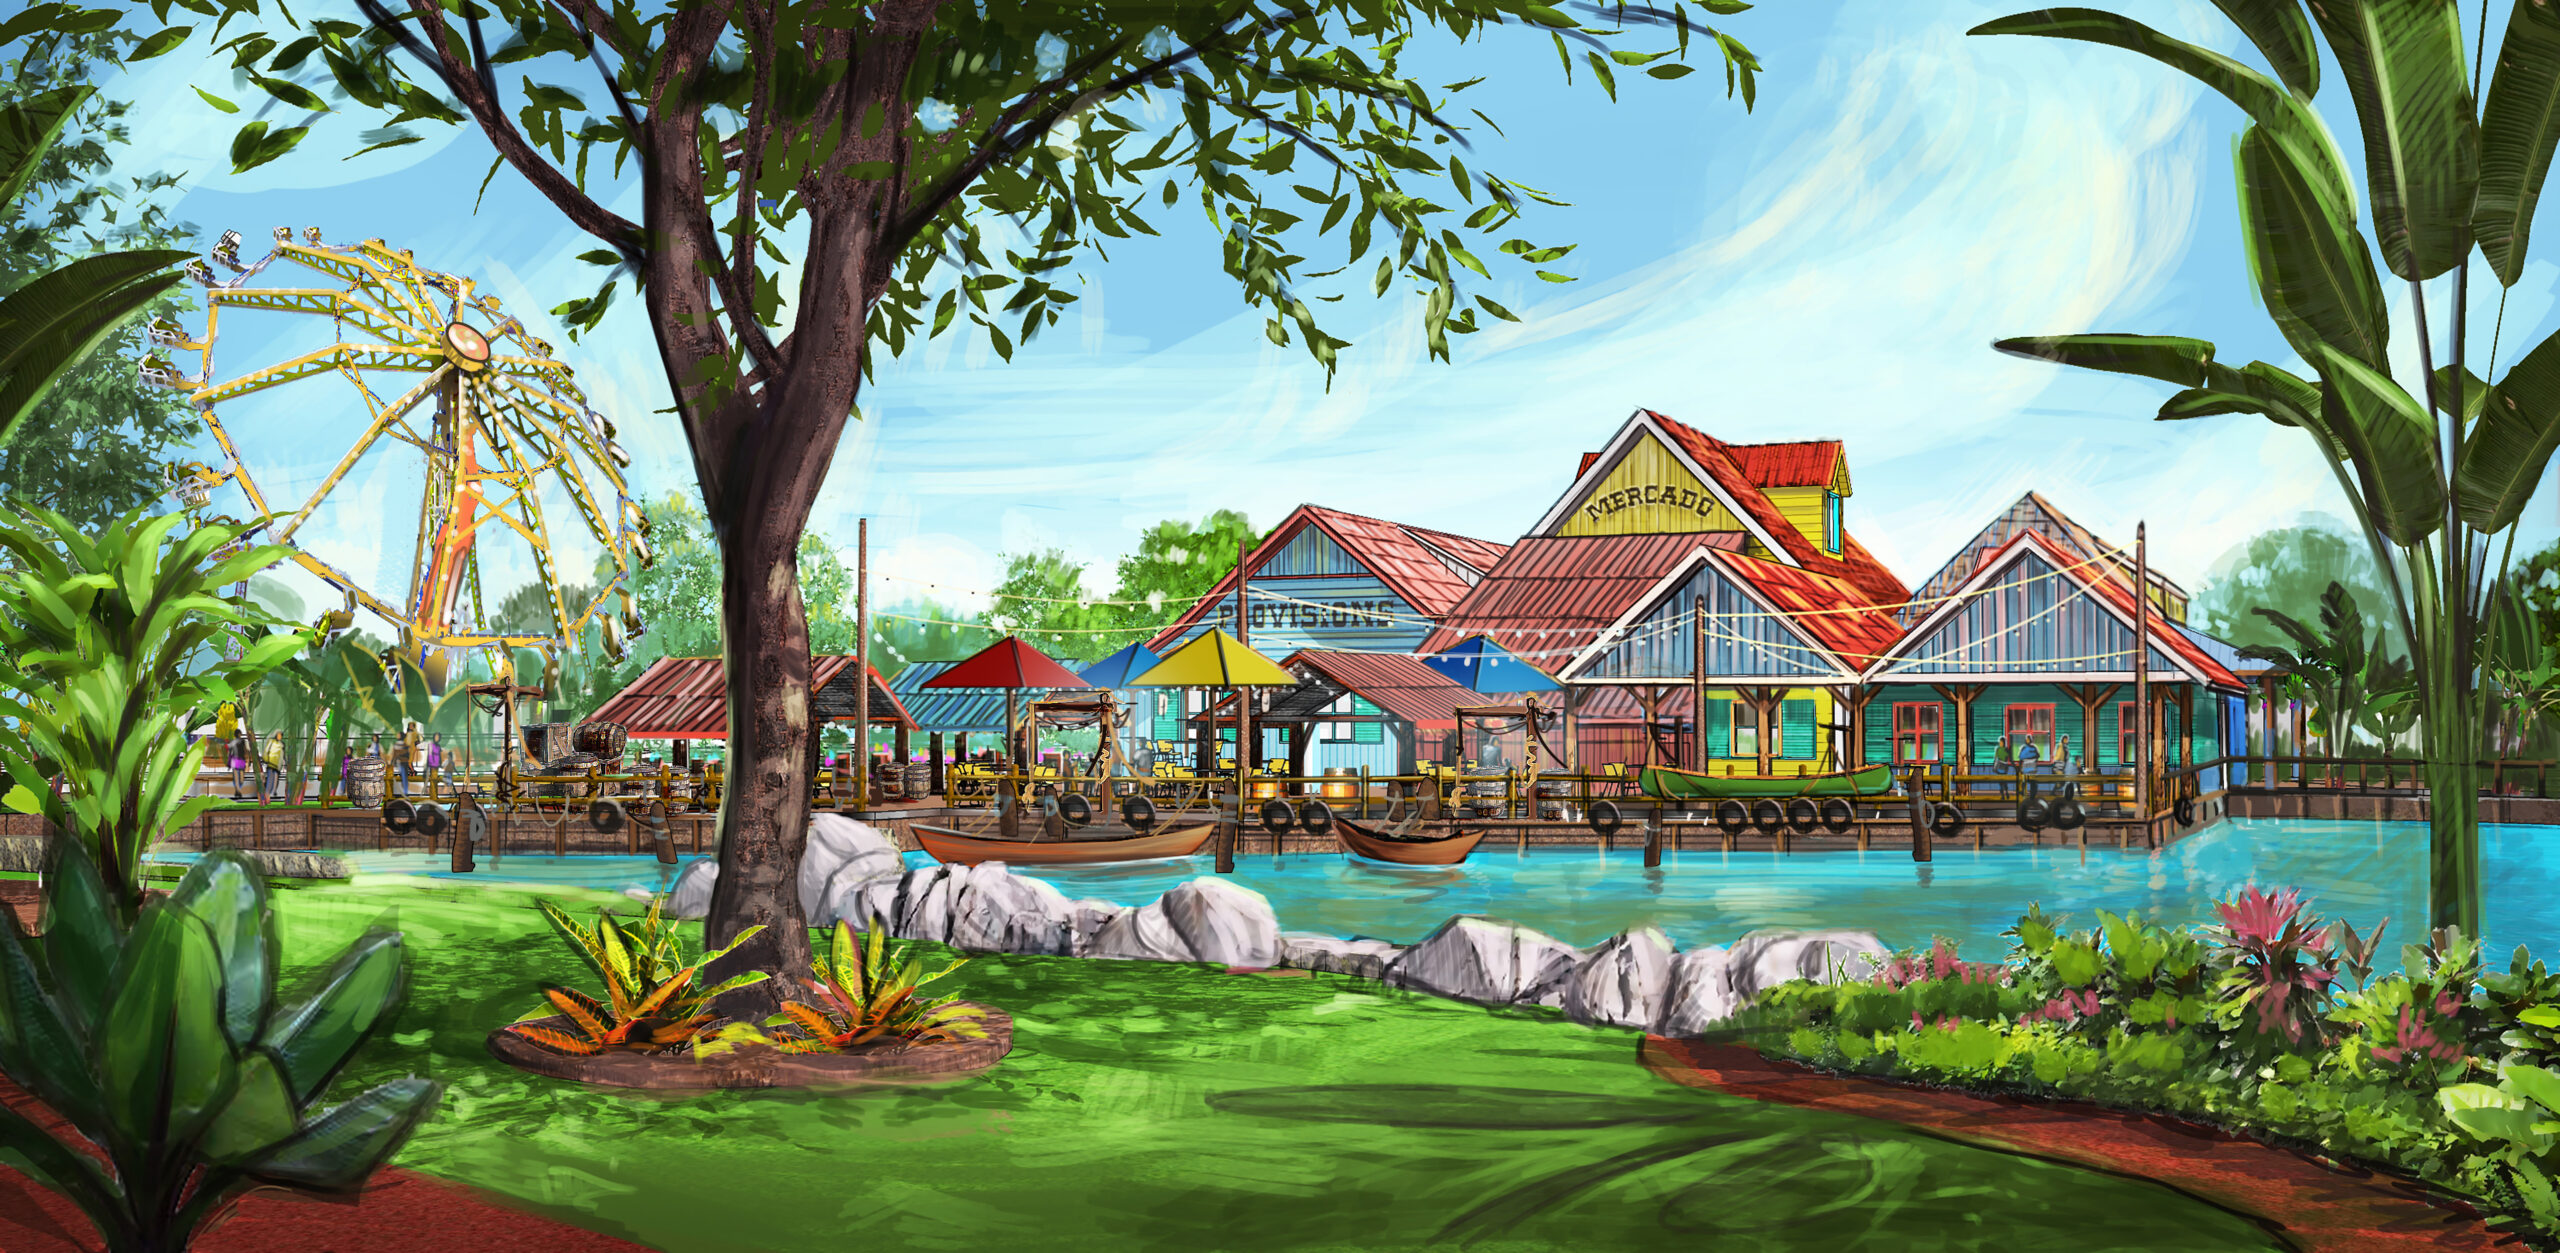 Kings Island to add themed area “Adventure Port” for 2023 season